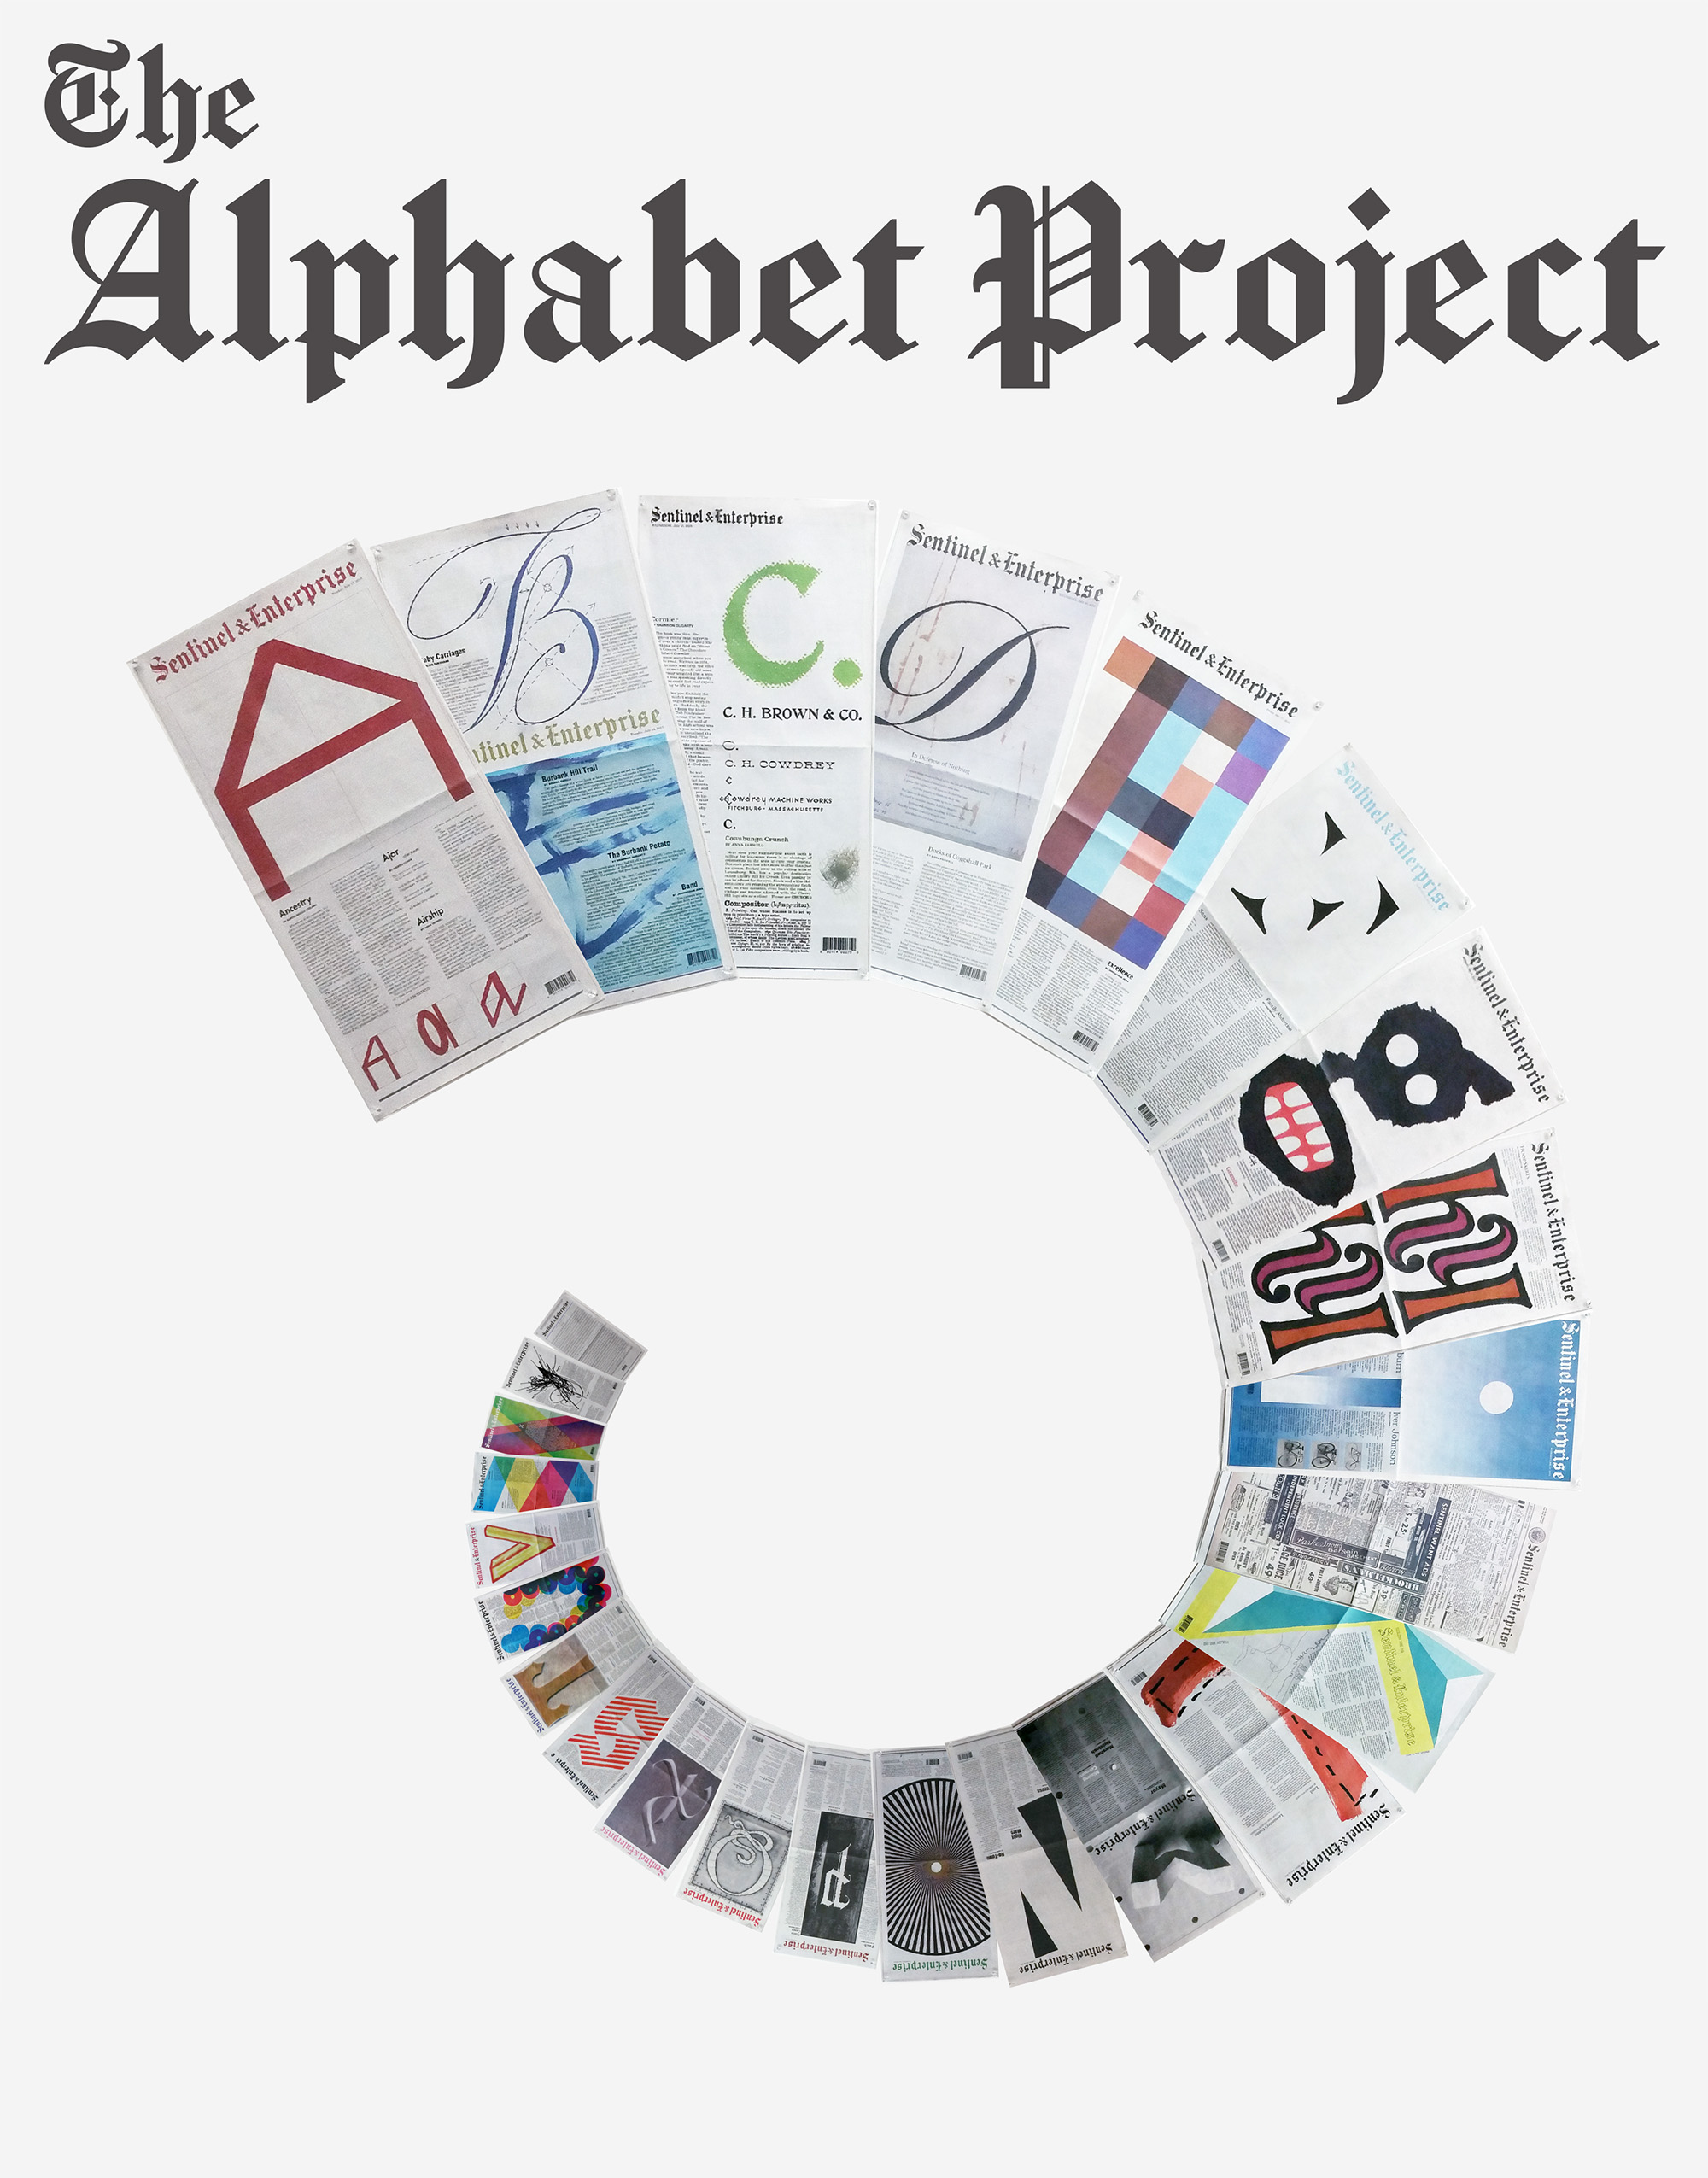 UML-Exhibit-Alphabet-Poster